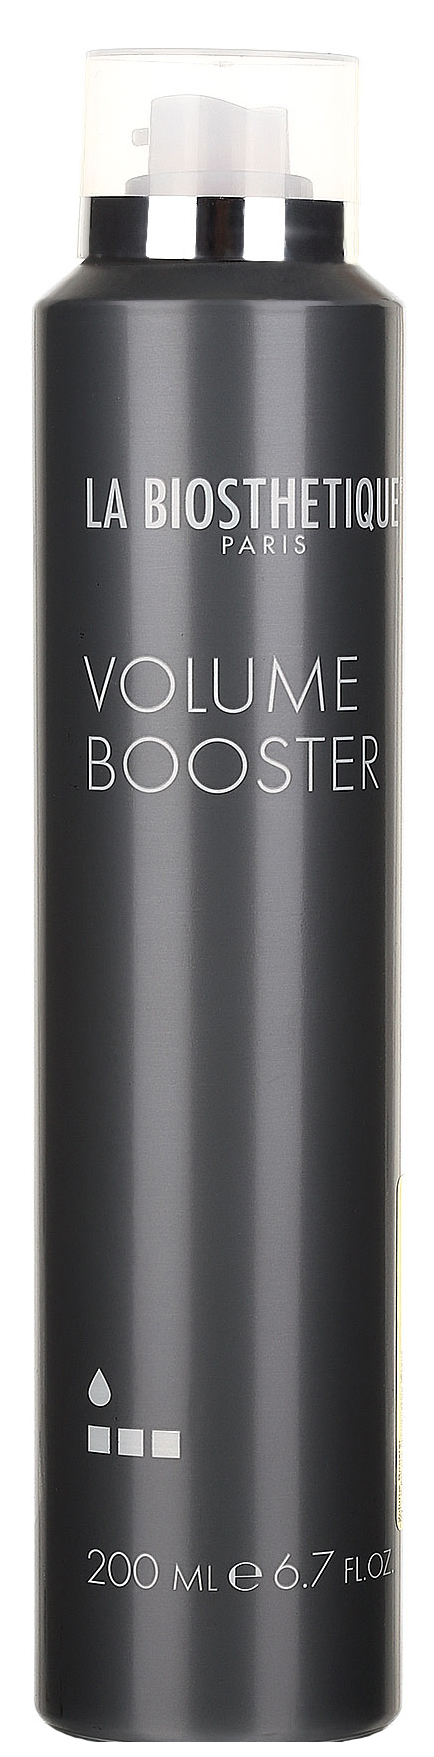 Мусс для волос La Biosthetique Base Volume Booster 200 мл мусс спрей для прикорневого объема volume booster 110005 200 мл 200 мл